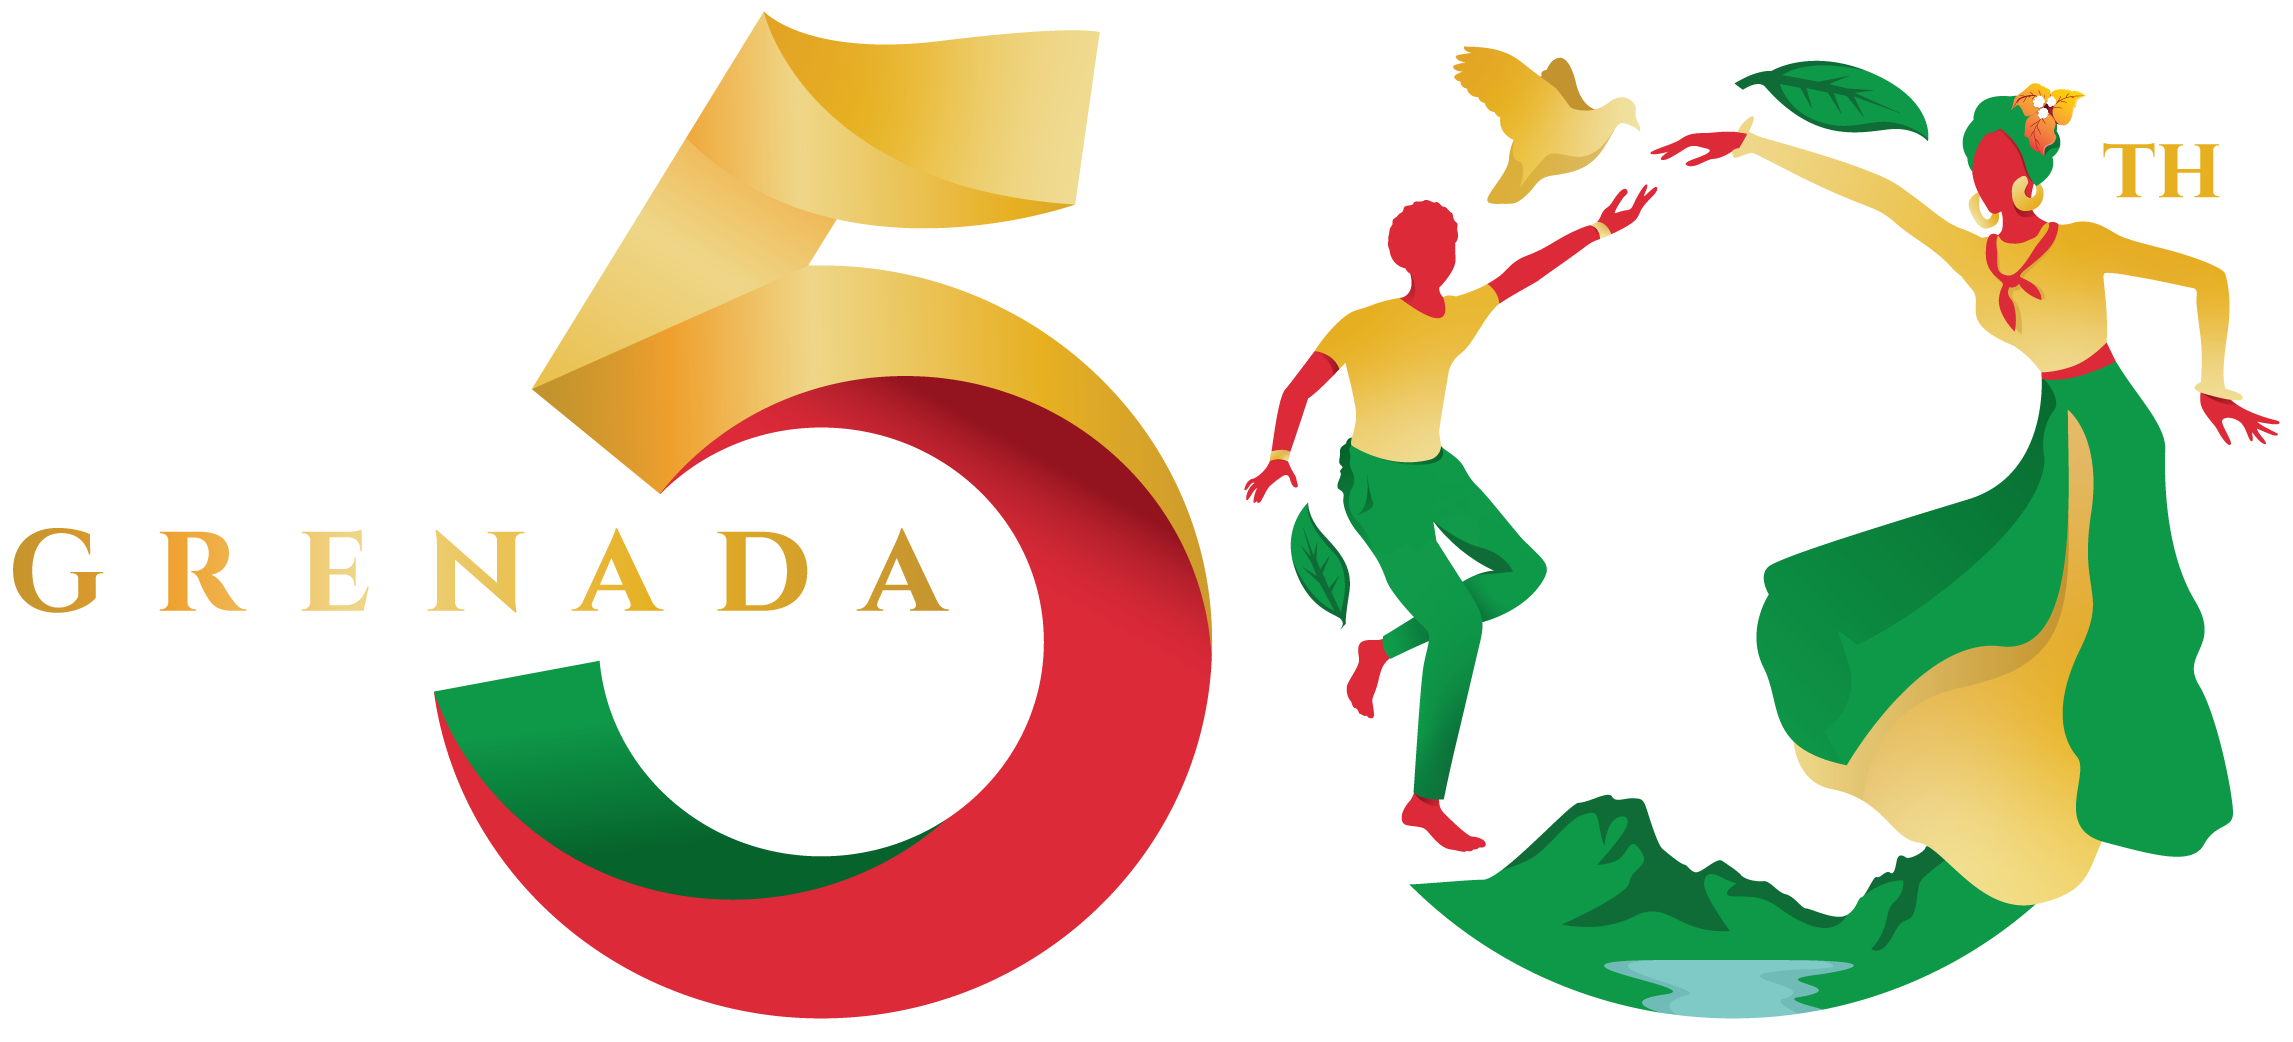 Grenada Turns 50